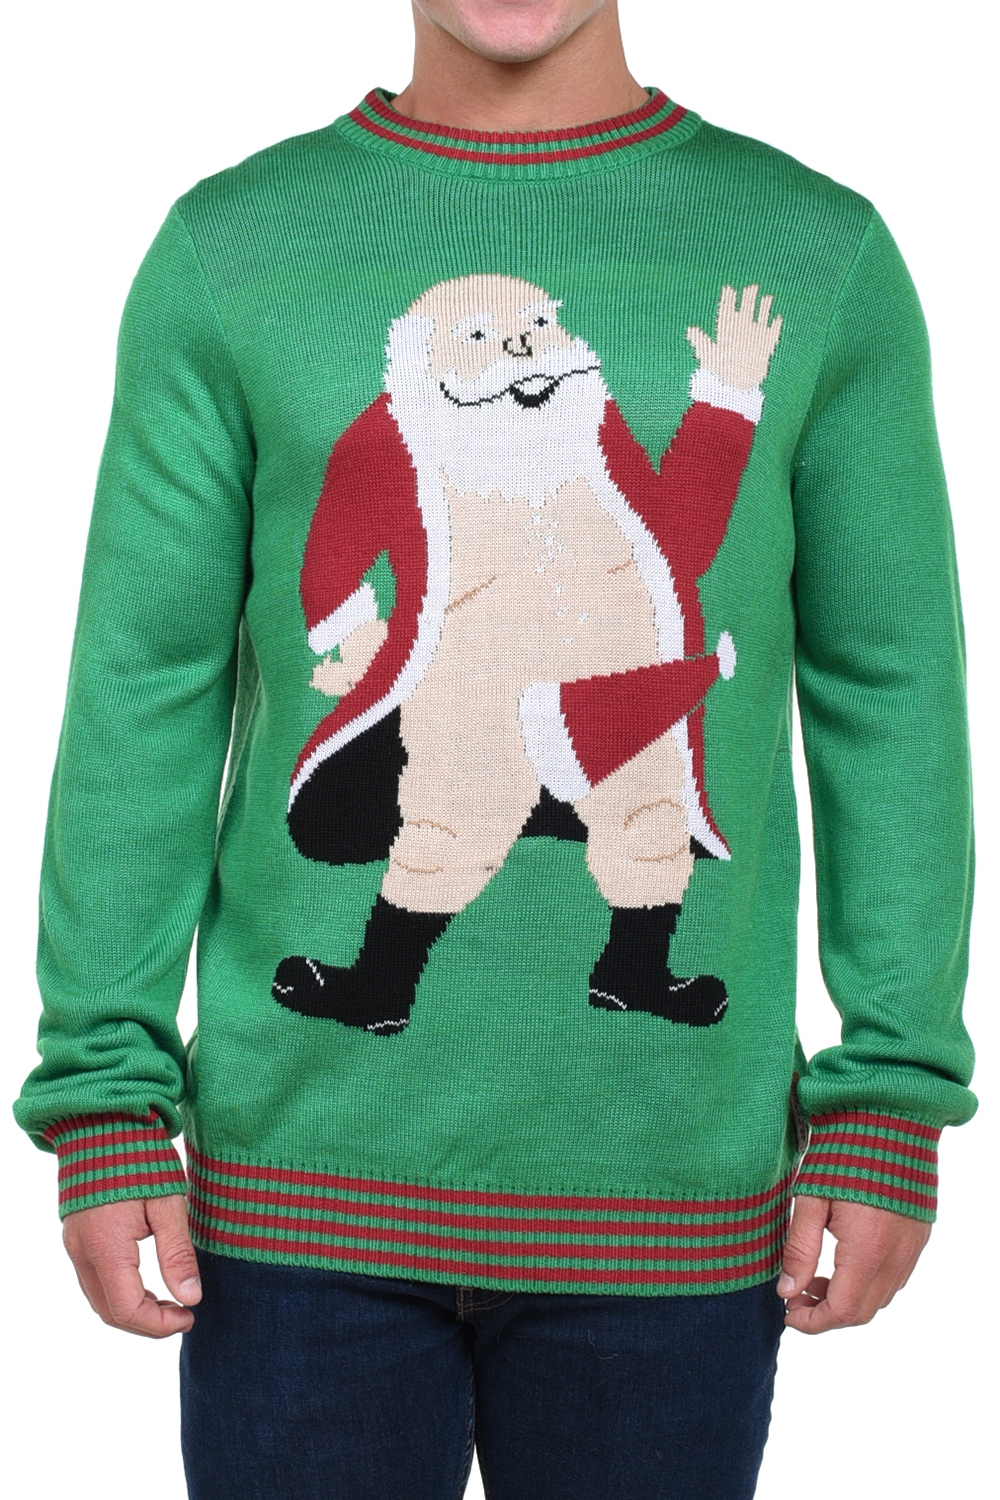 South Pole Naughty Santa Christmas Sweater Image2